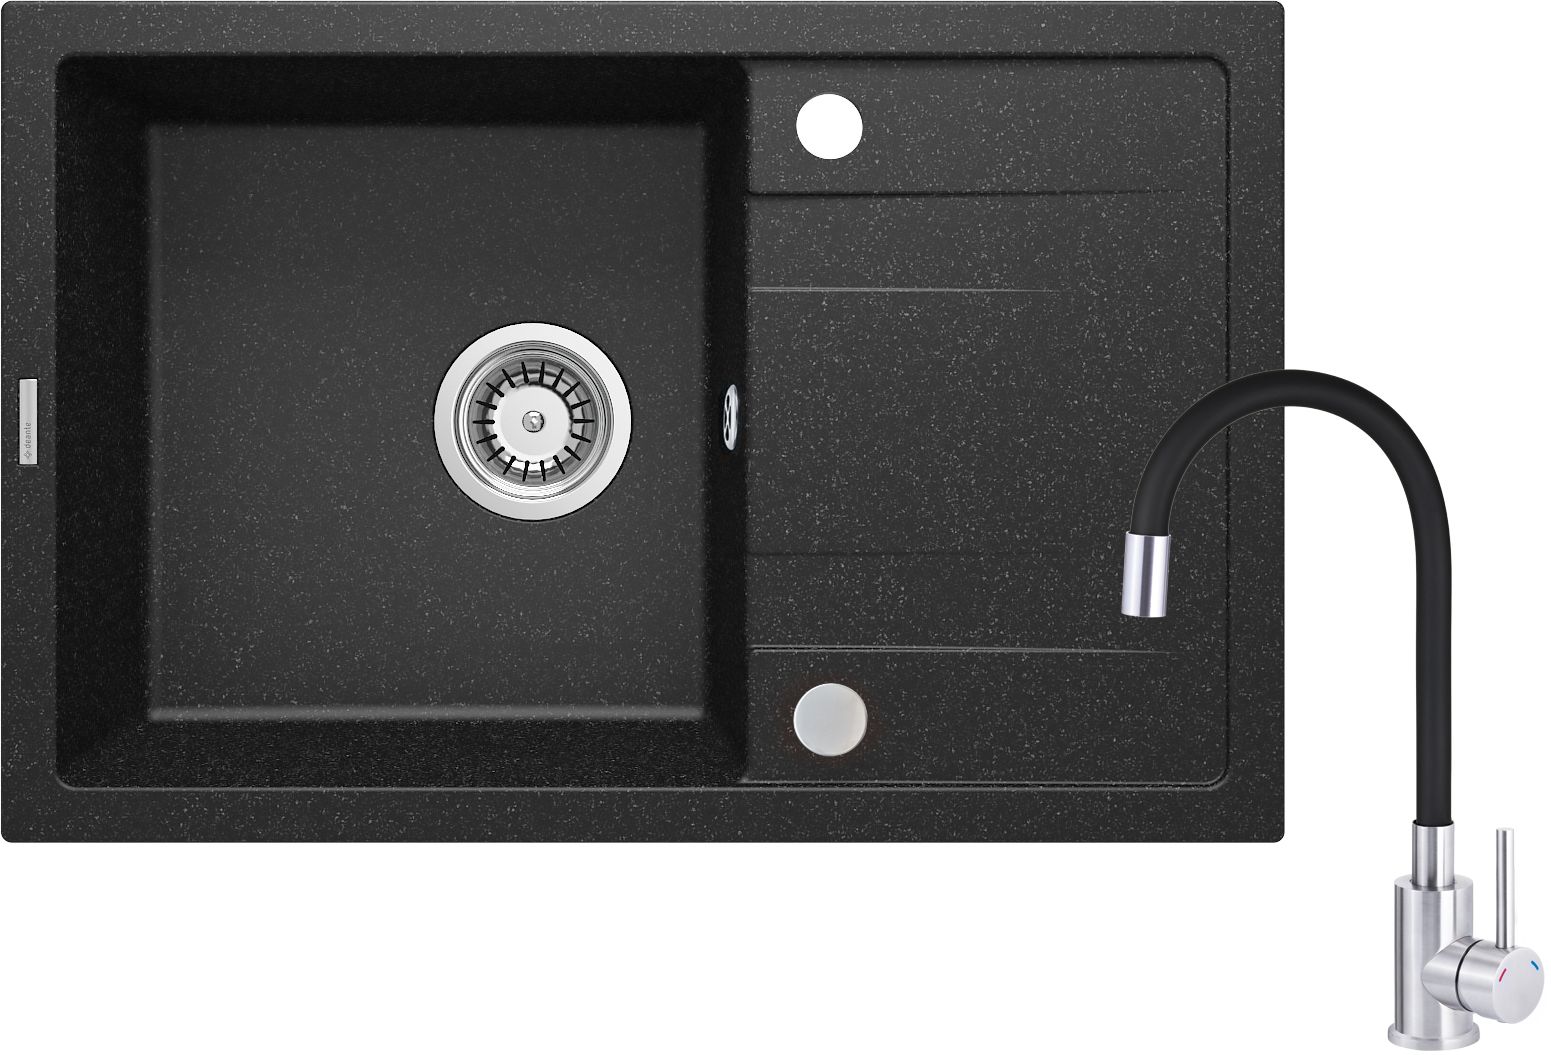 Granitspülbecken mit Armatur, flexibler Auslauf - ZRCP2113 - Główne zdjęcie produktowe